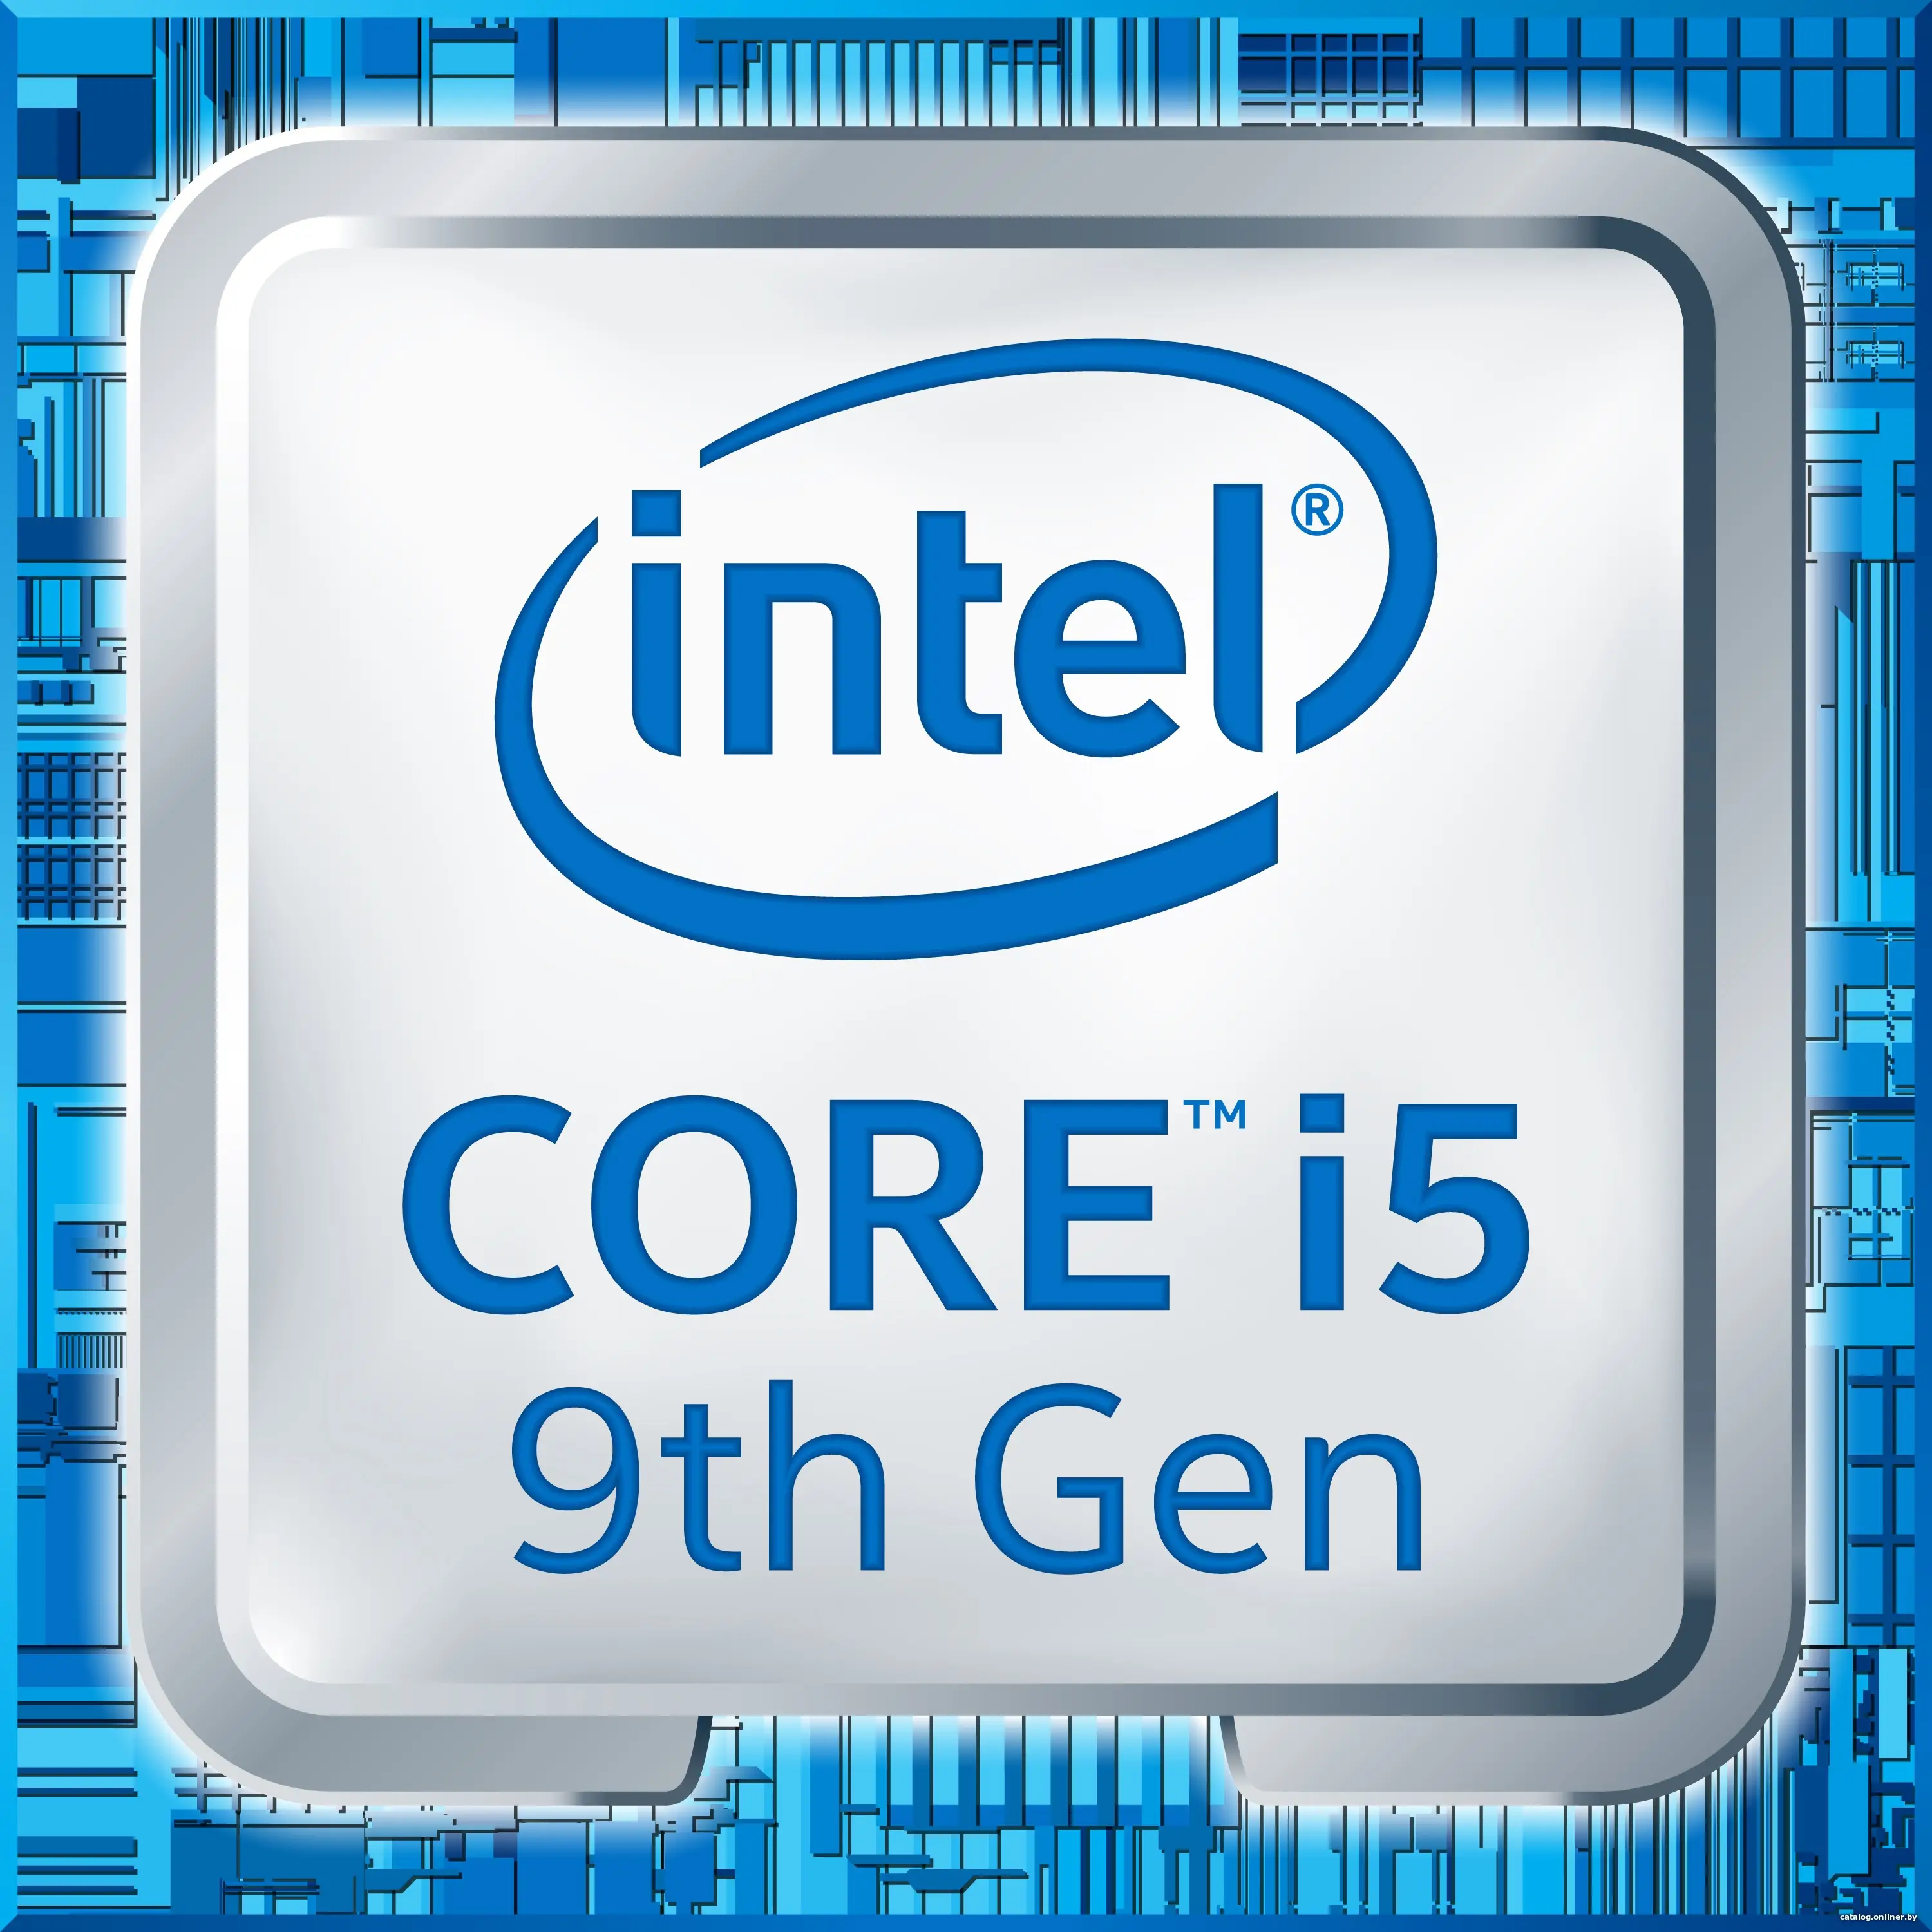 Купить Процессор Intel Core i5-9400F, цена, опт и розница